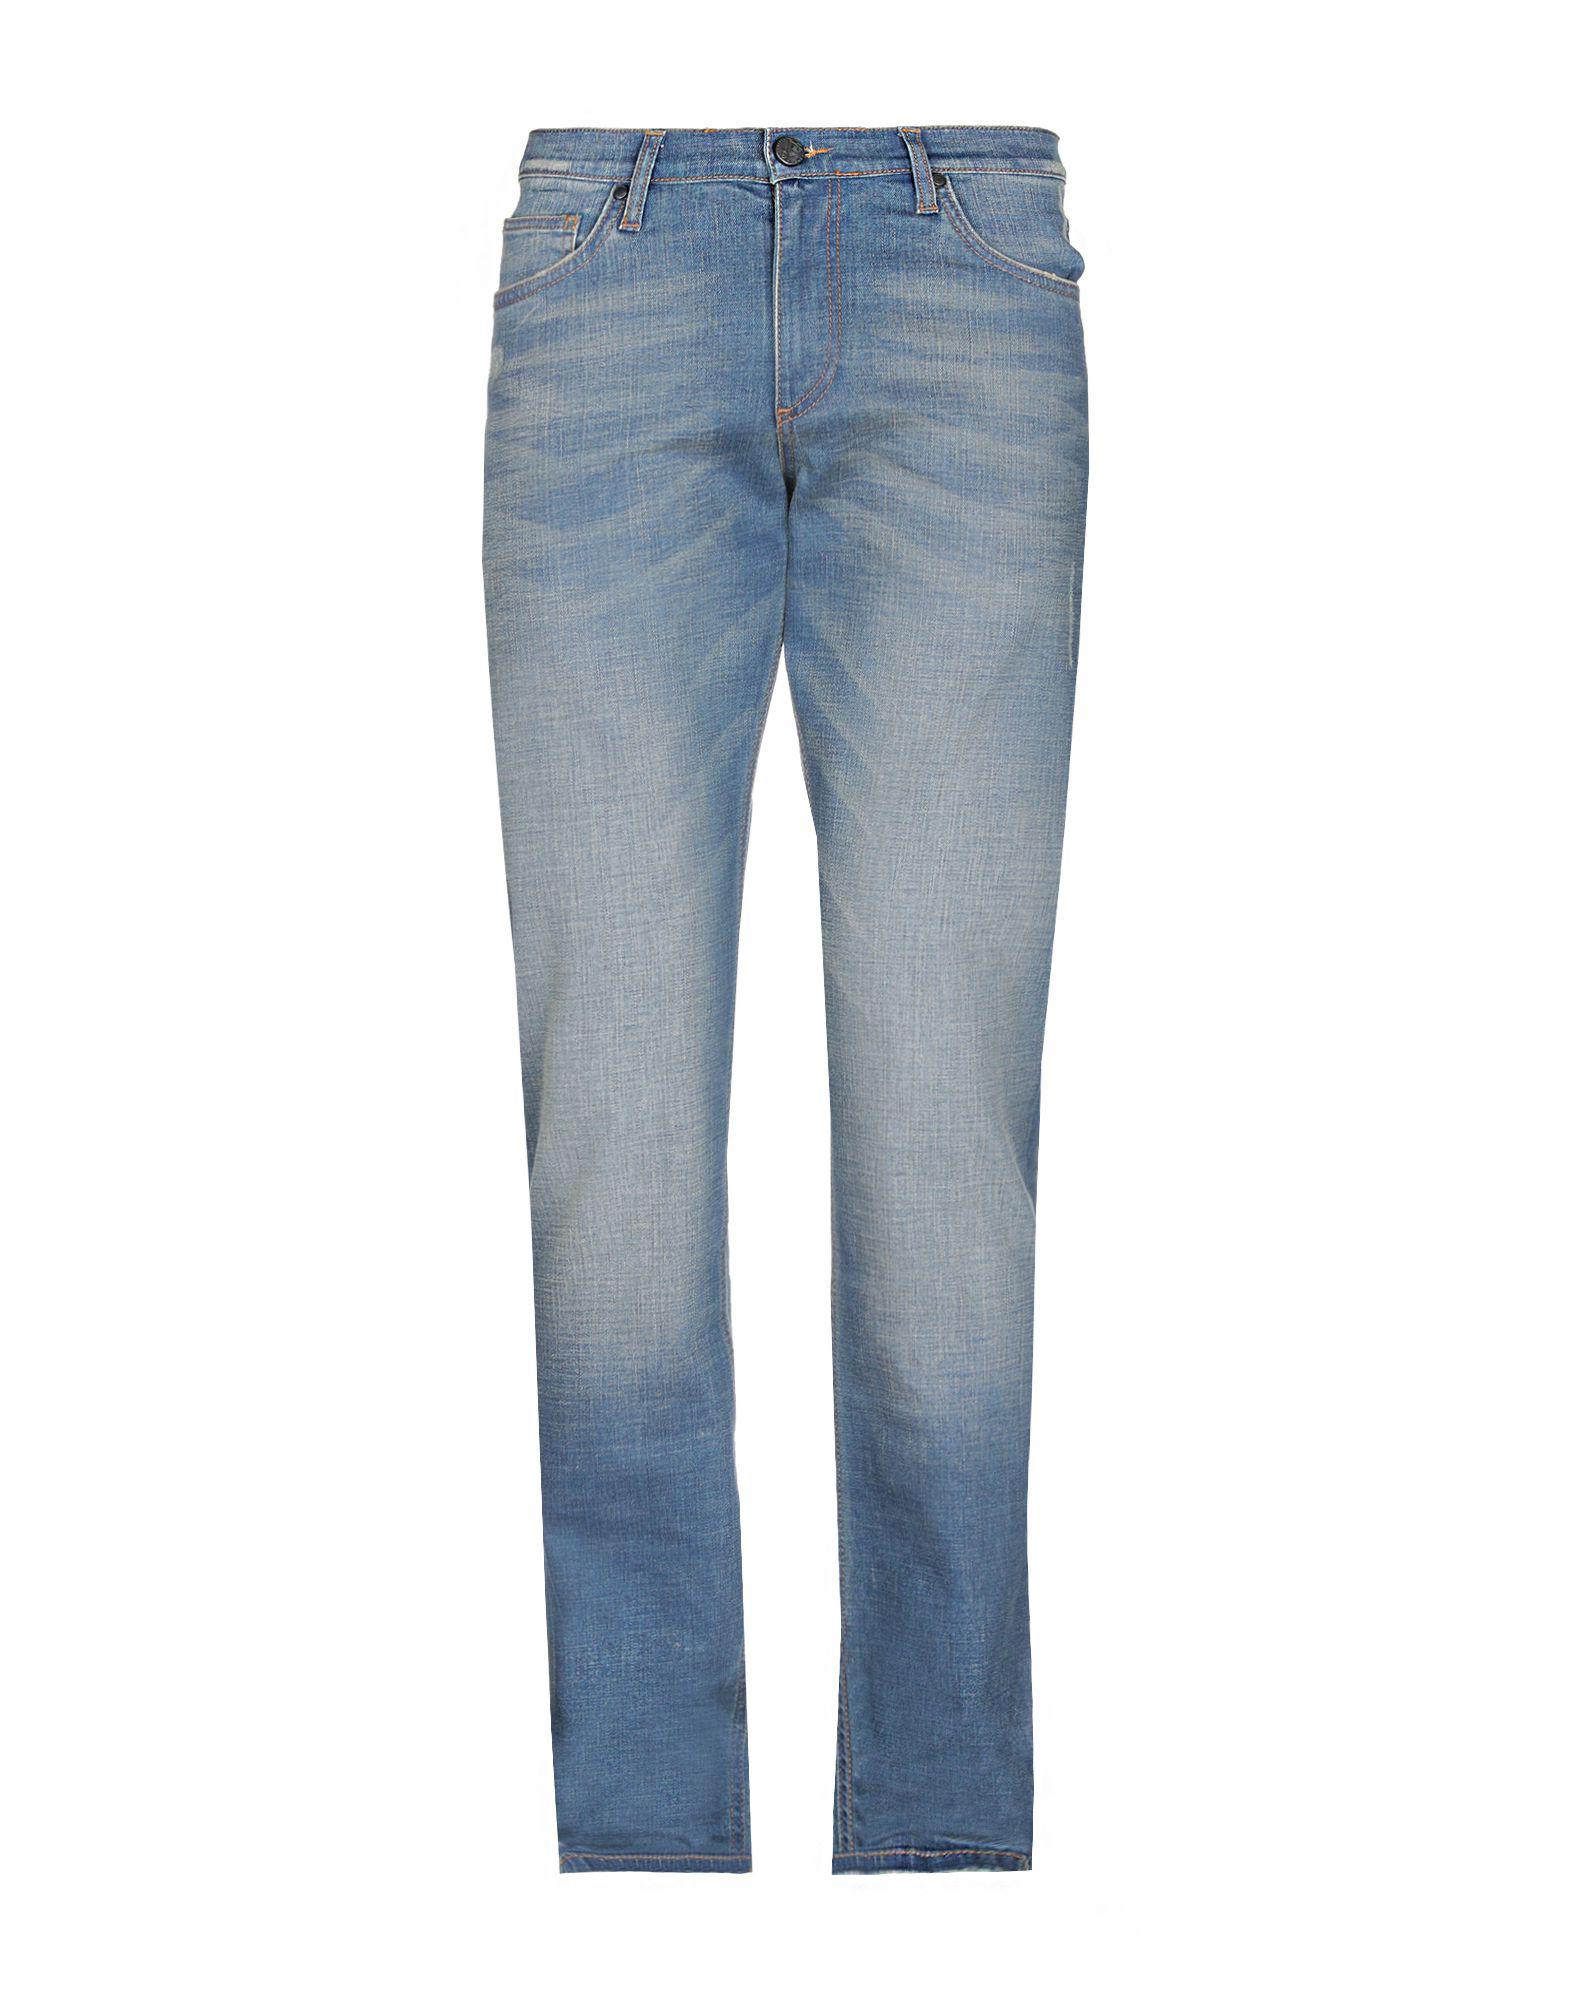 Versace Jeans Denim Pants in Blue for Men - Lyst